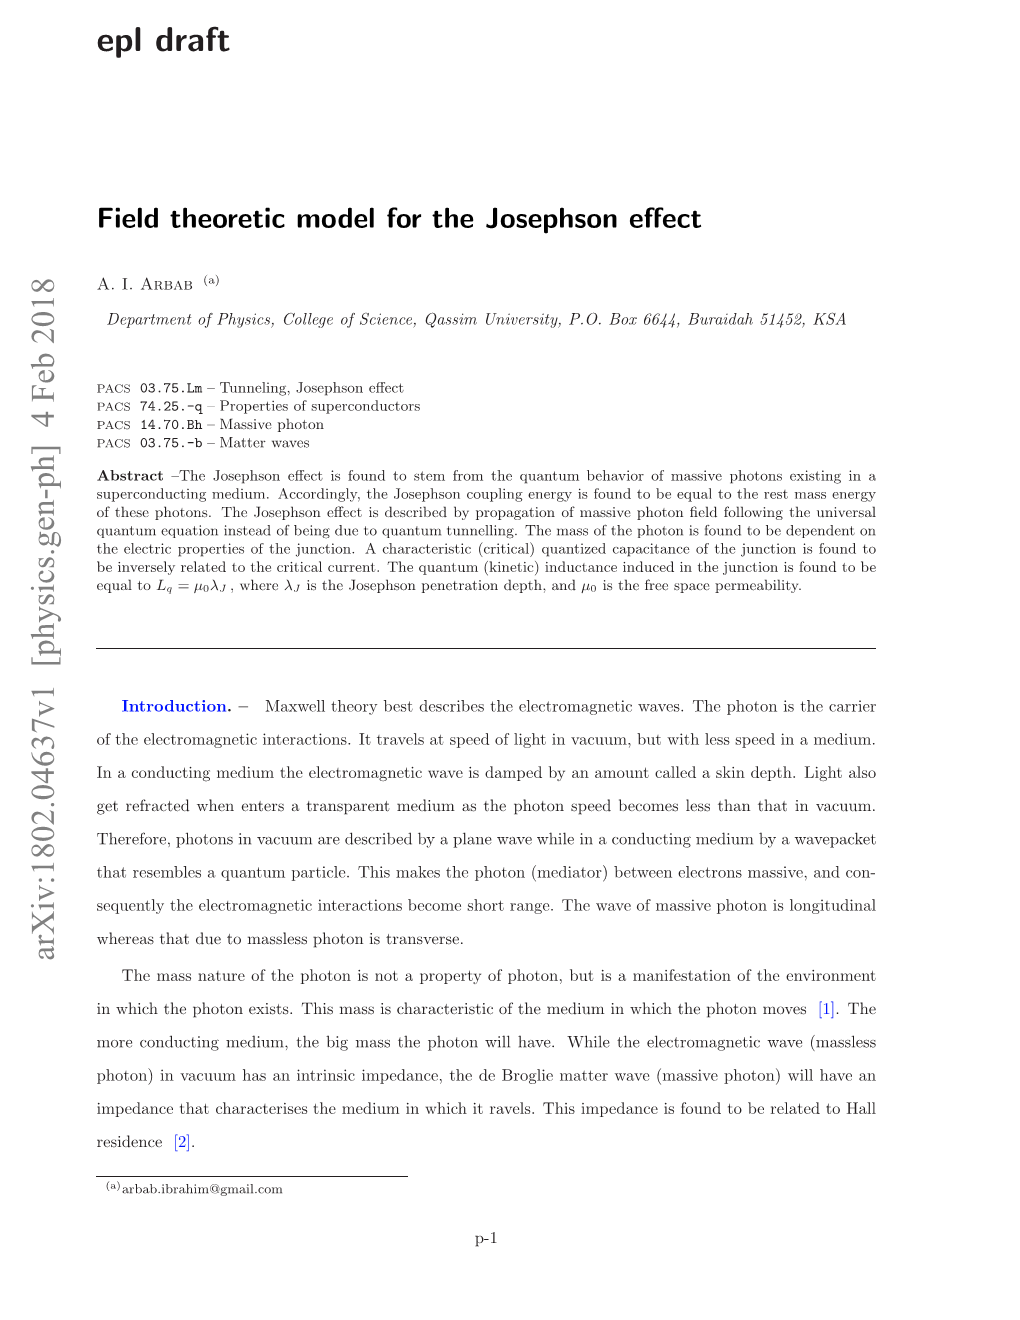 Field Theoretic Model for the Josephson Effect